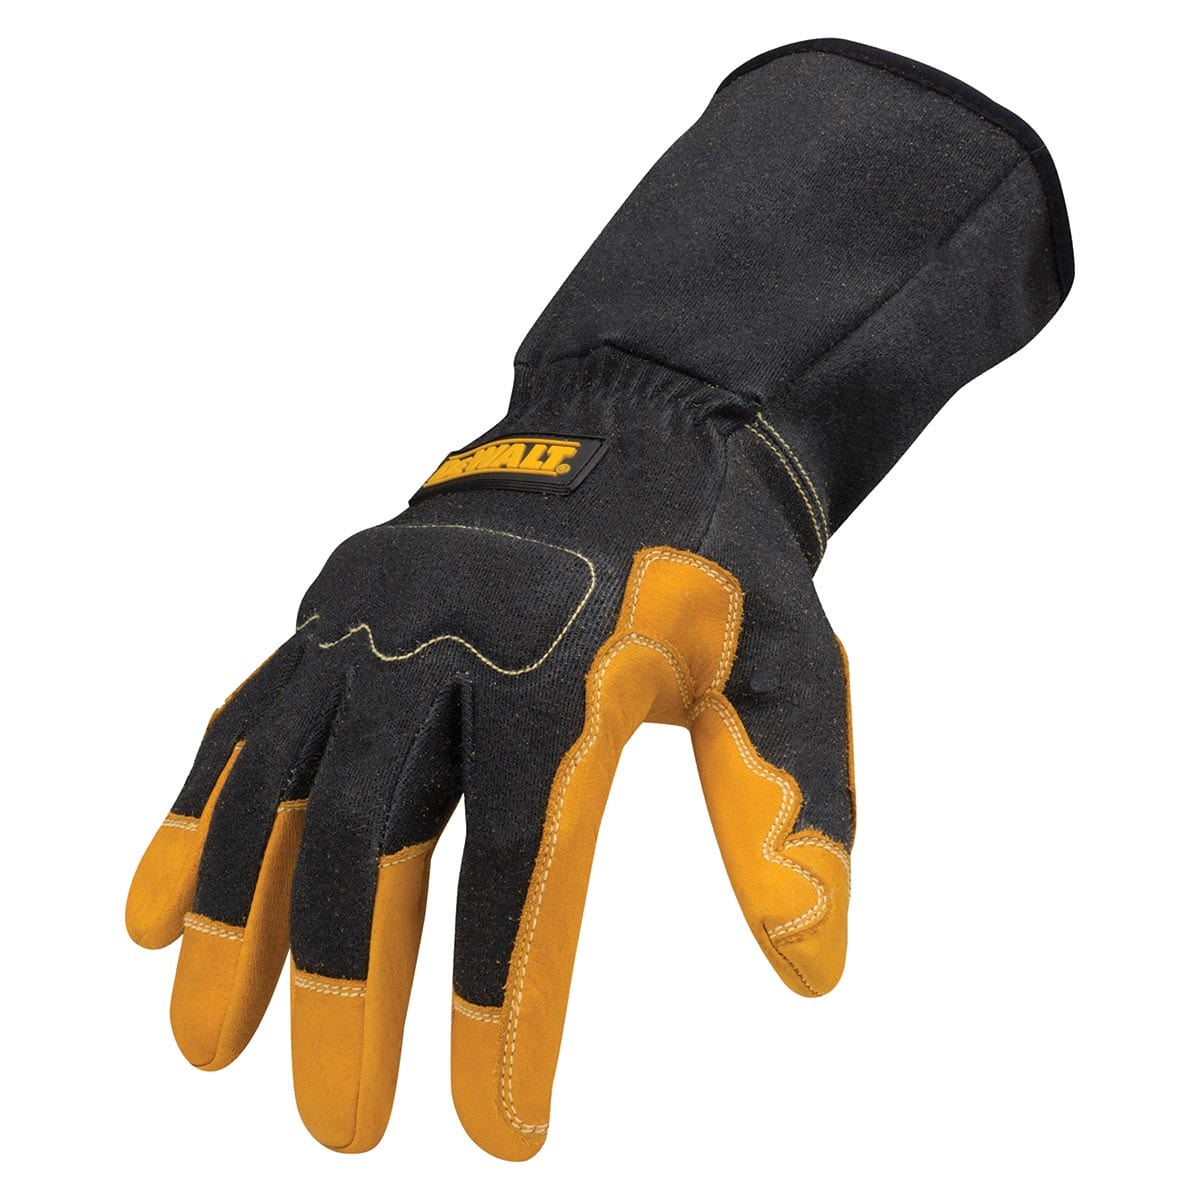 DEWALT Premium Fabricator's Gloves